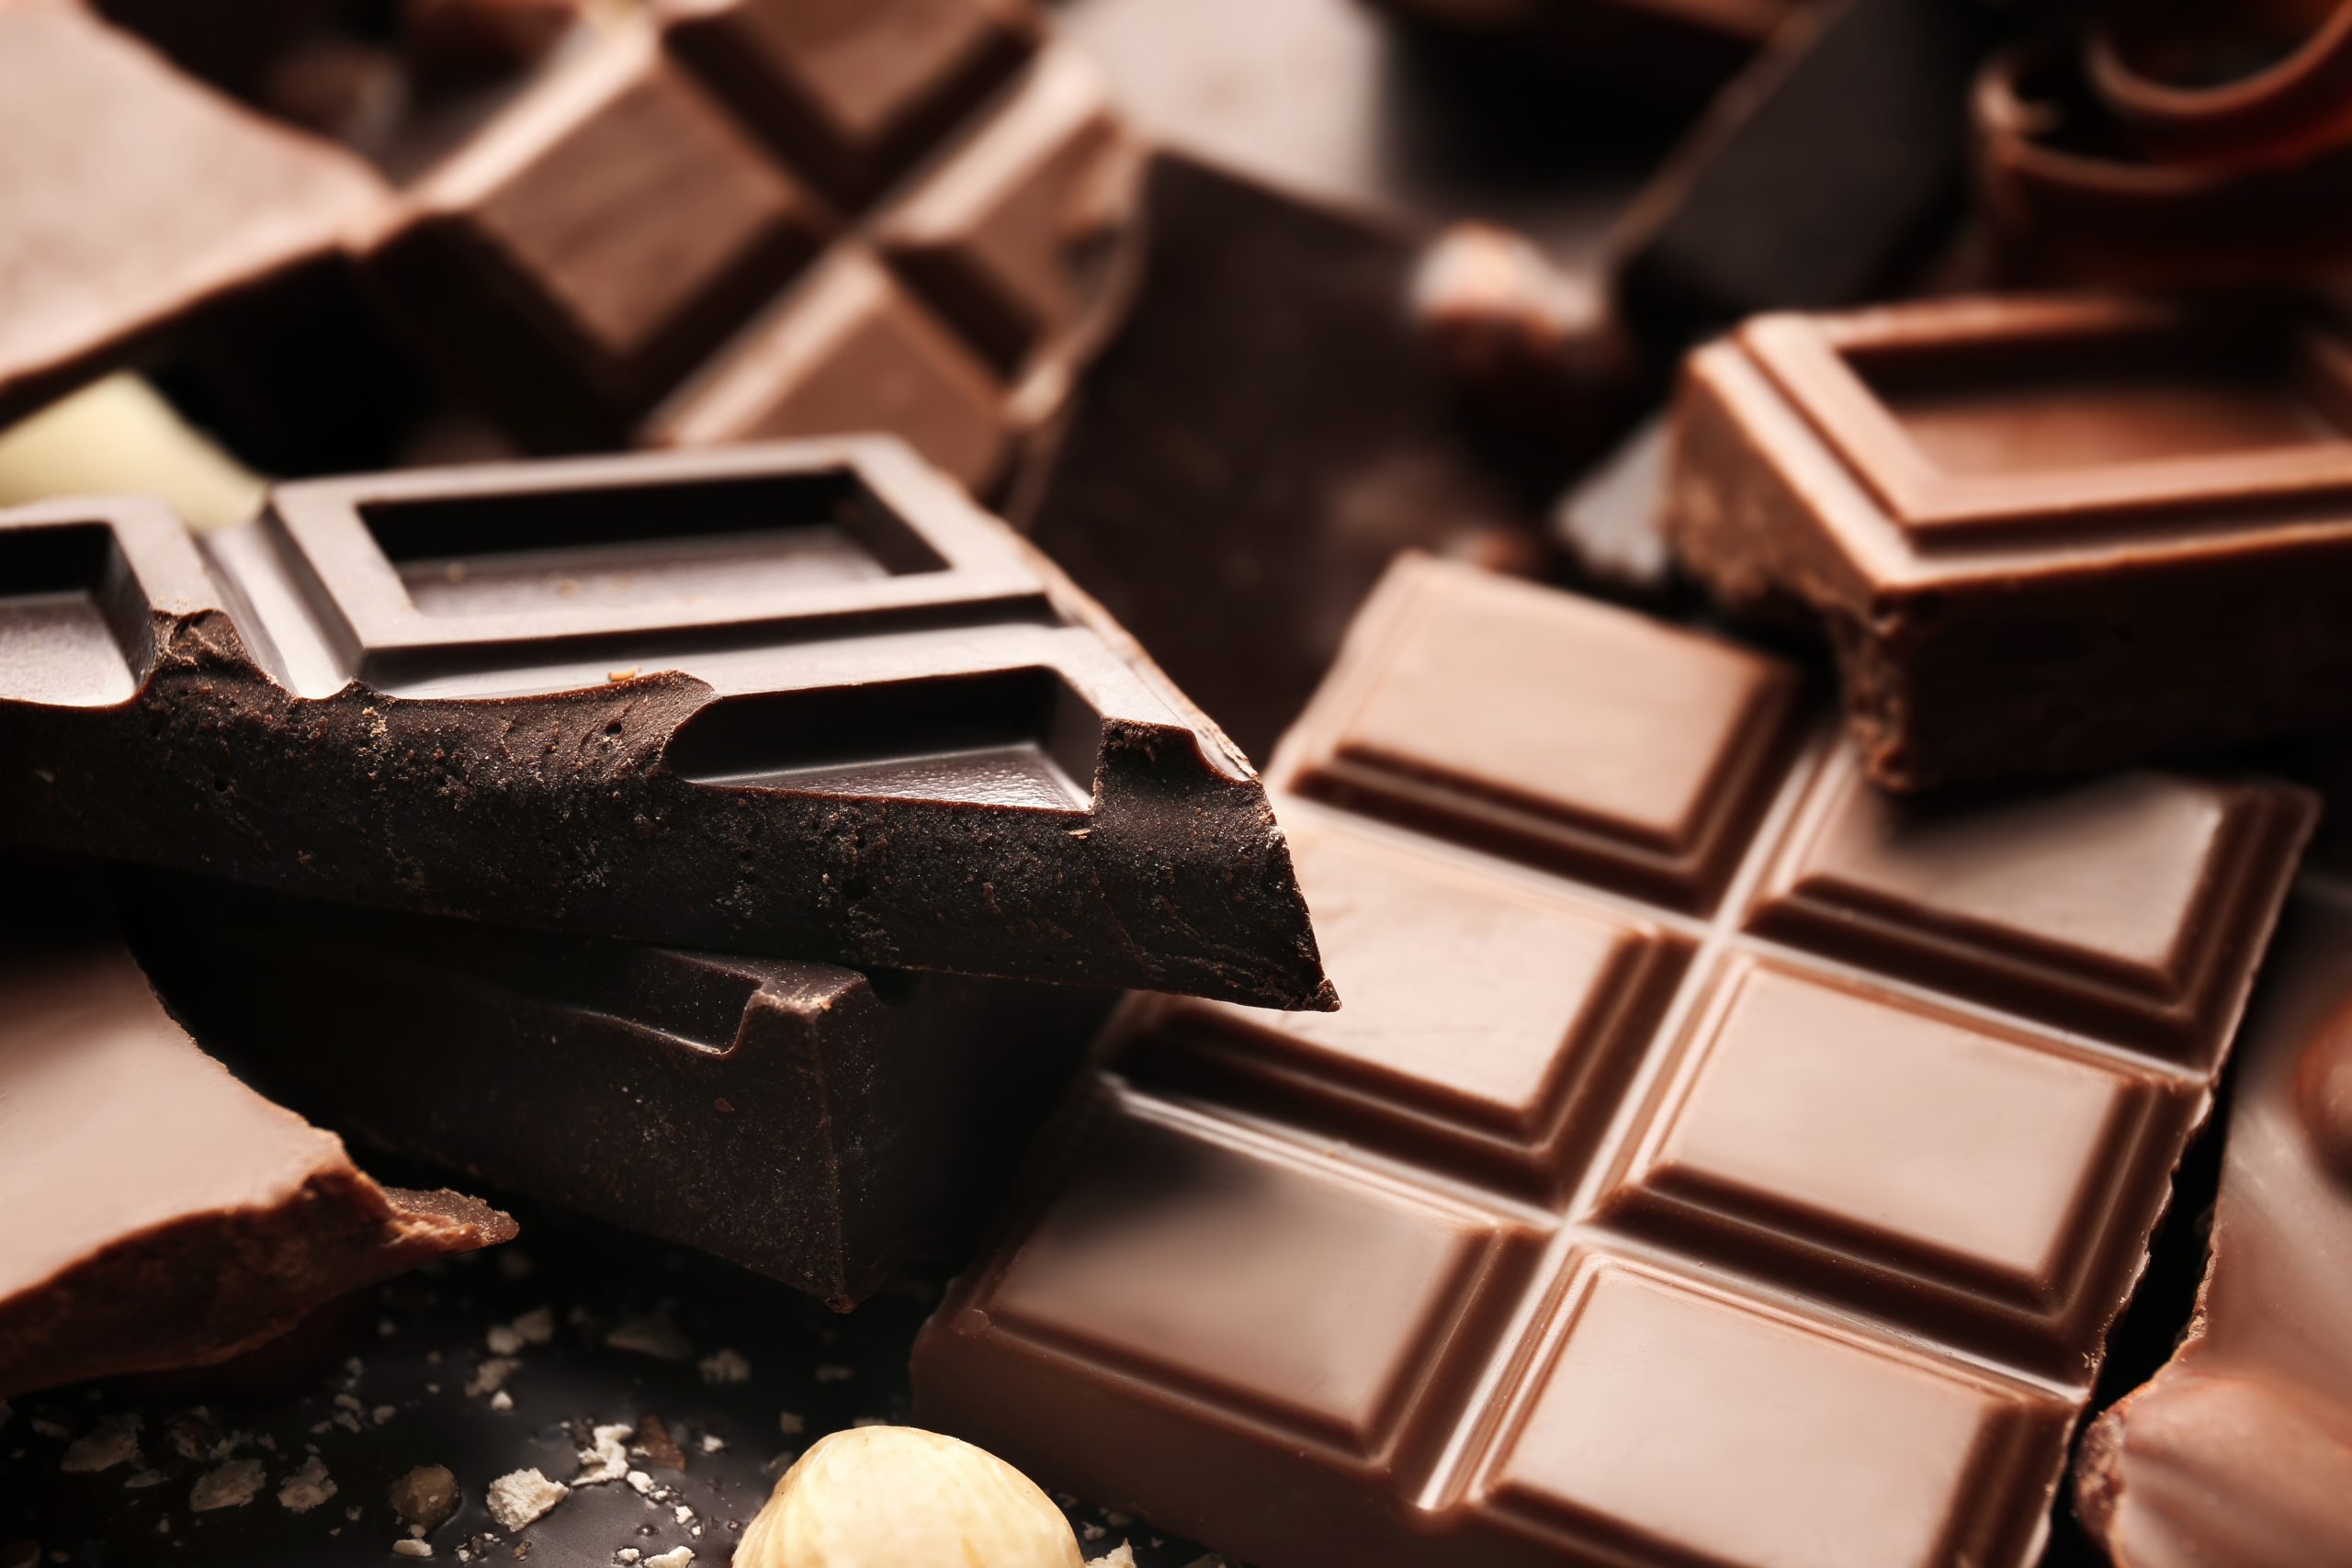 Dark Chocolate | Refreshments | Healthy Snacks | Los Angeles Vending | Micro-Markets | Los Angeles Office Coffee | Office Pantry